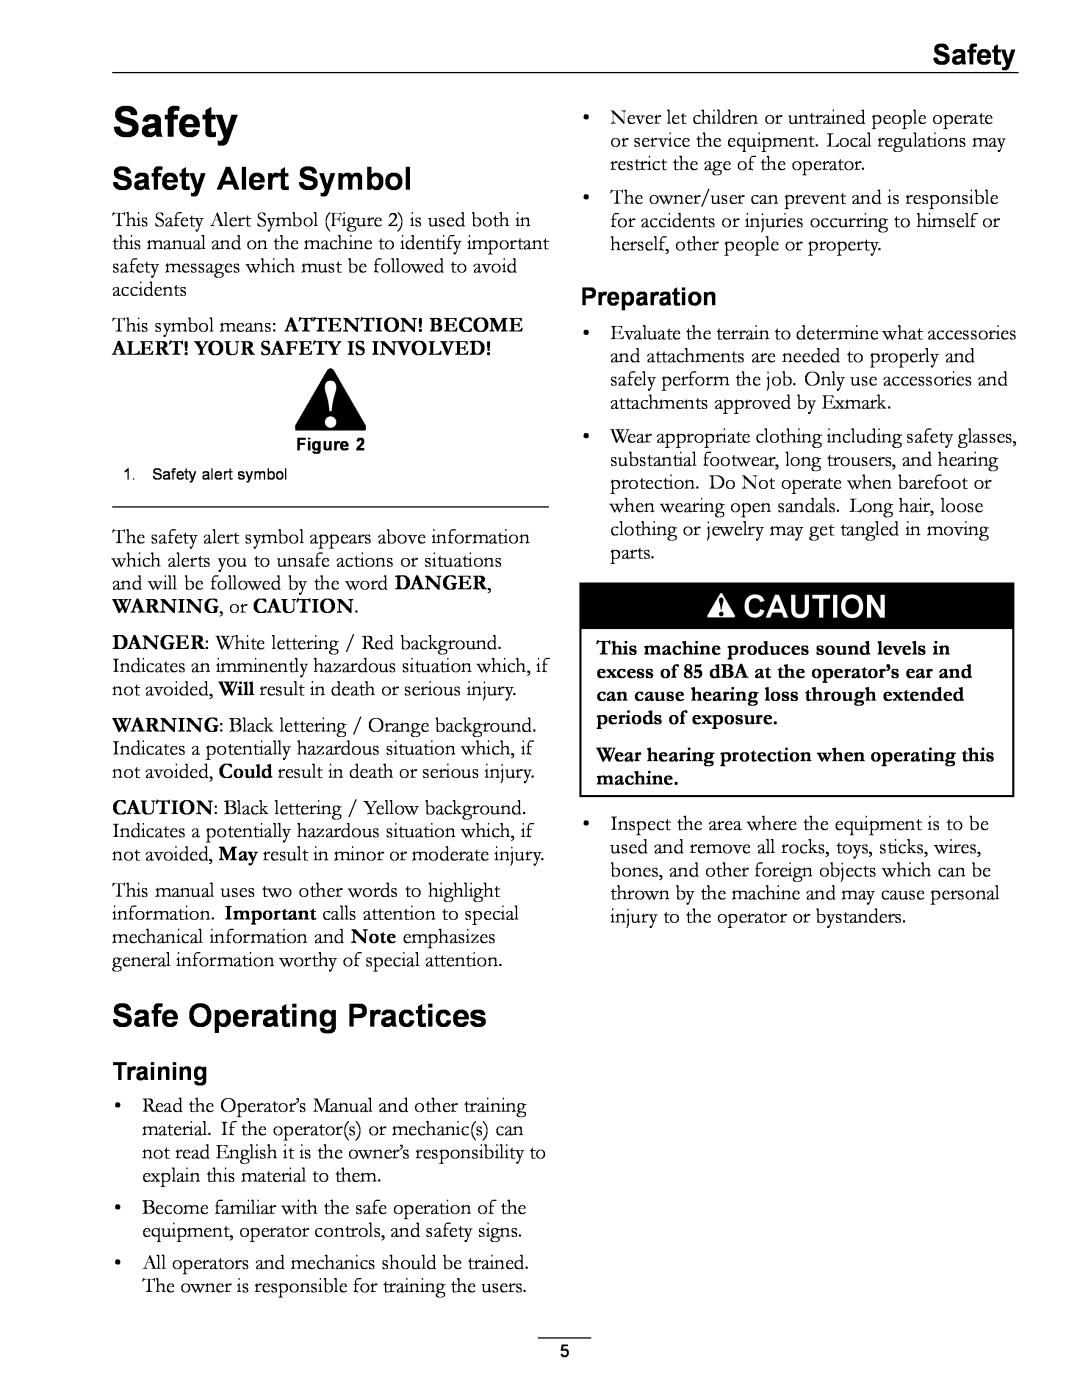 Exmark Phazer Safety Alert Symbol, Safe Operating Practices, Training, Preparation, Alert! Your Safety Is Involved 